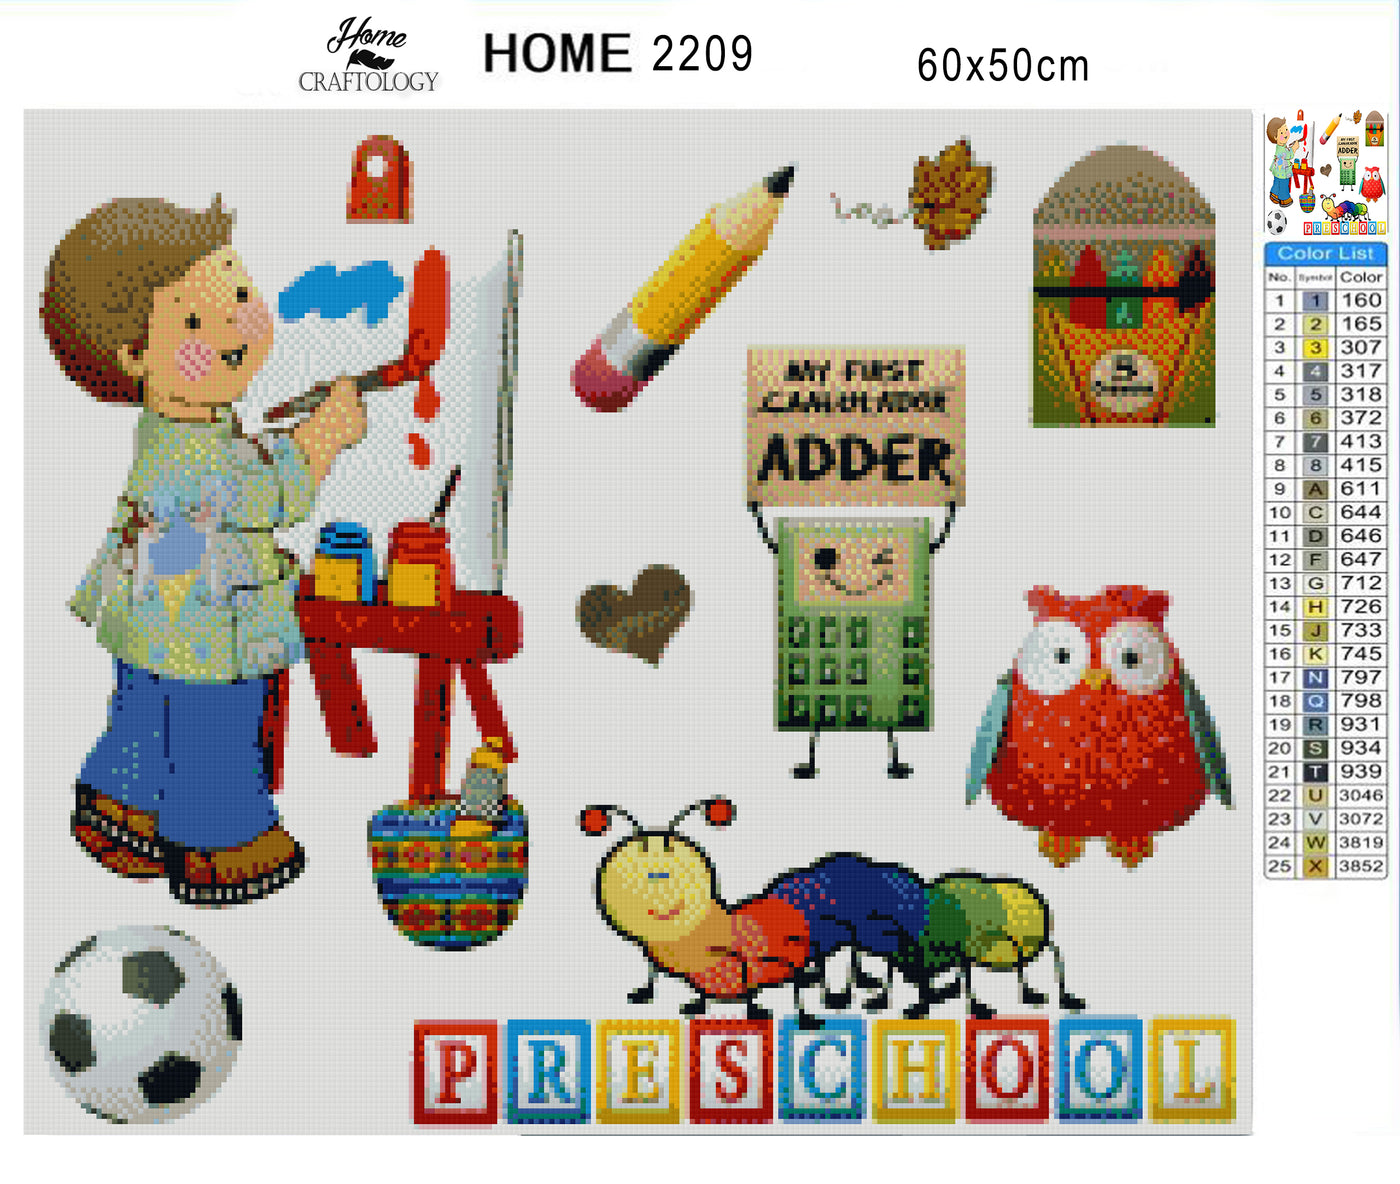 Preschool - Premium Diamond Painting Kit